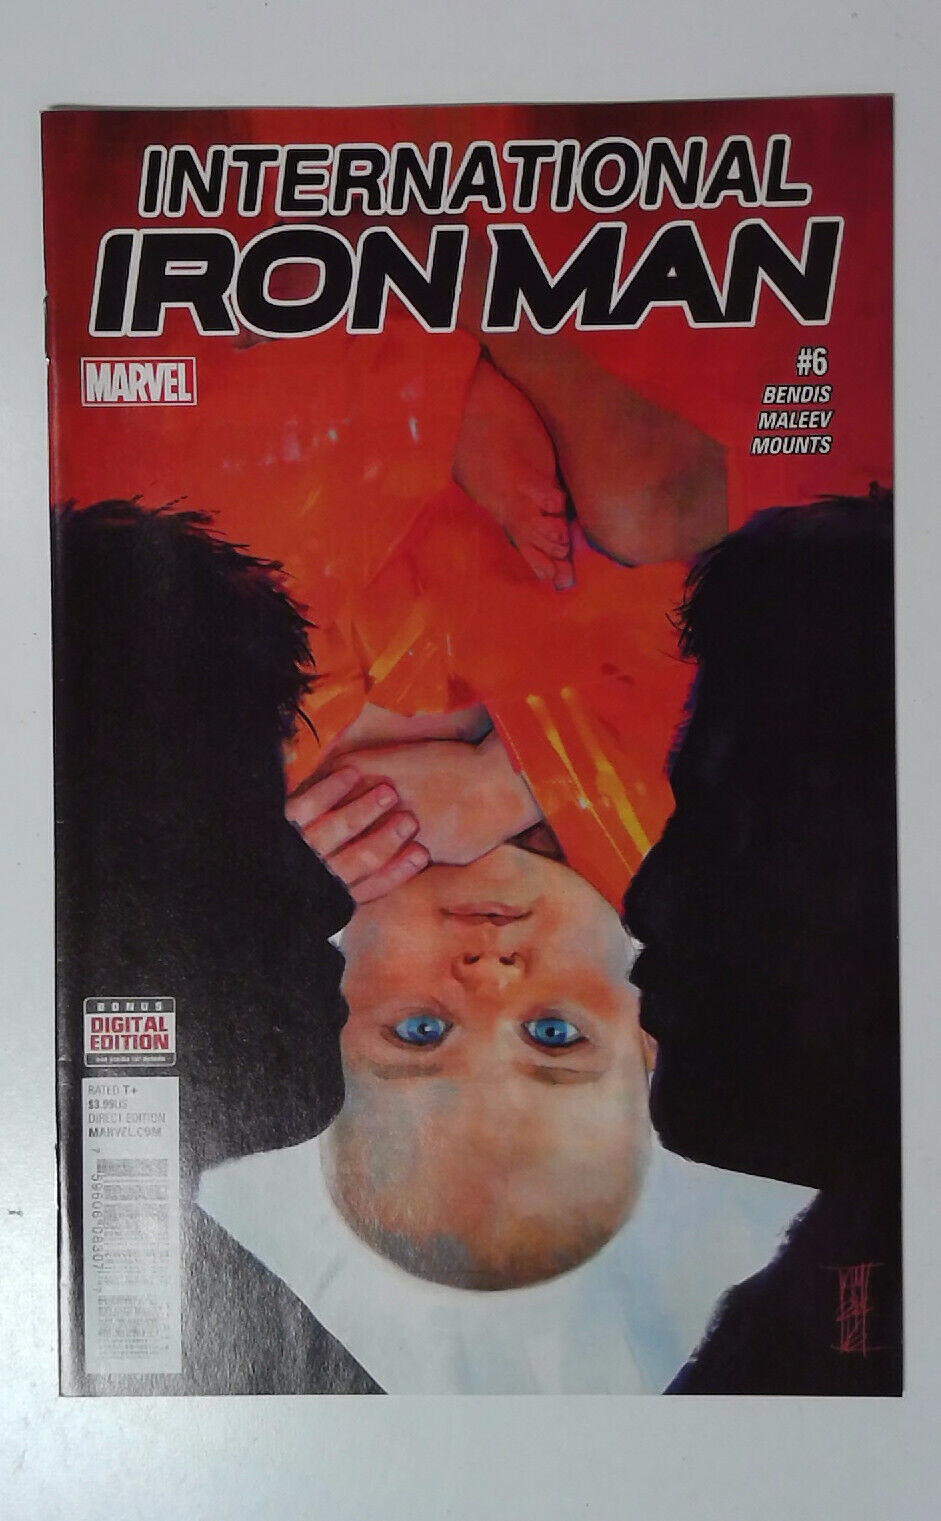 2016 International Iron Man #6 Marvel NM 1st Print Comic Book